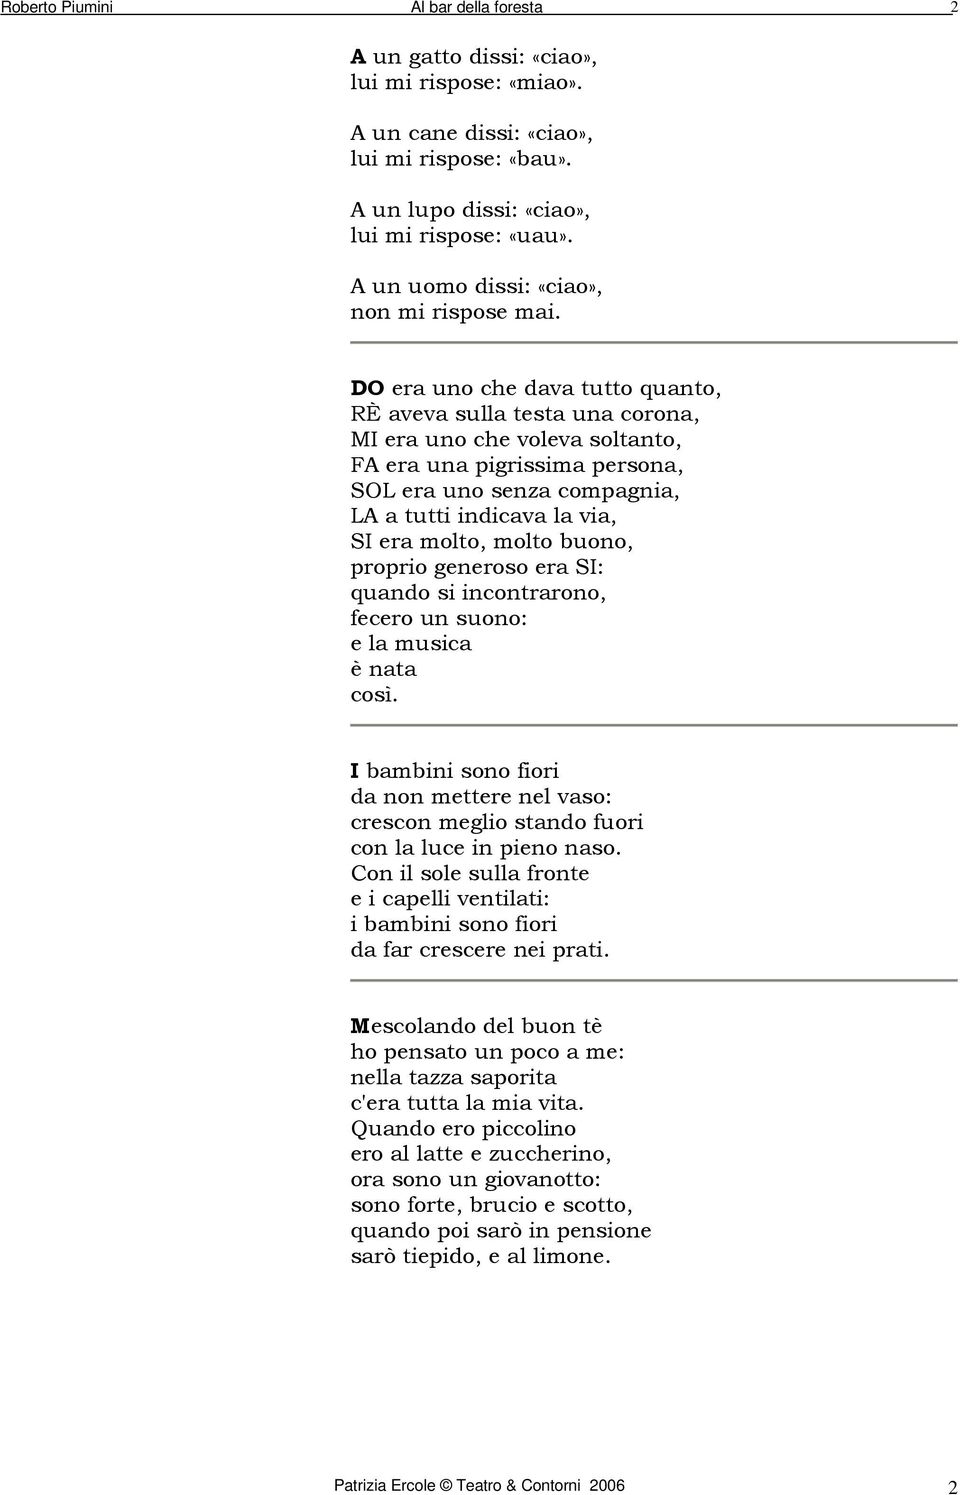 Poesie Di Natale Di Piumini.Poesie Di Roberto Piumini Pdf Free Download